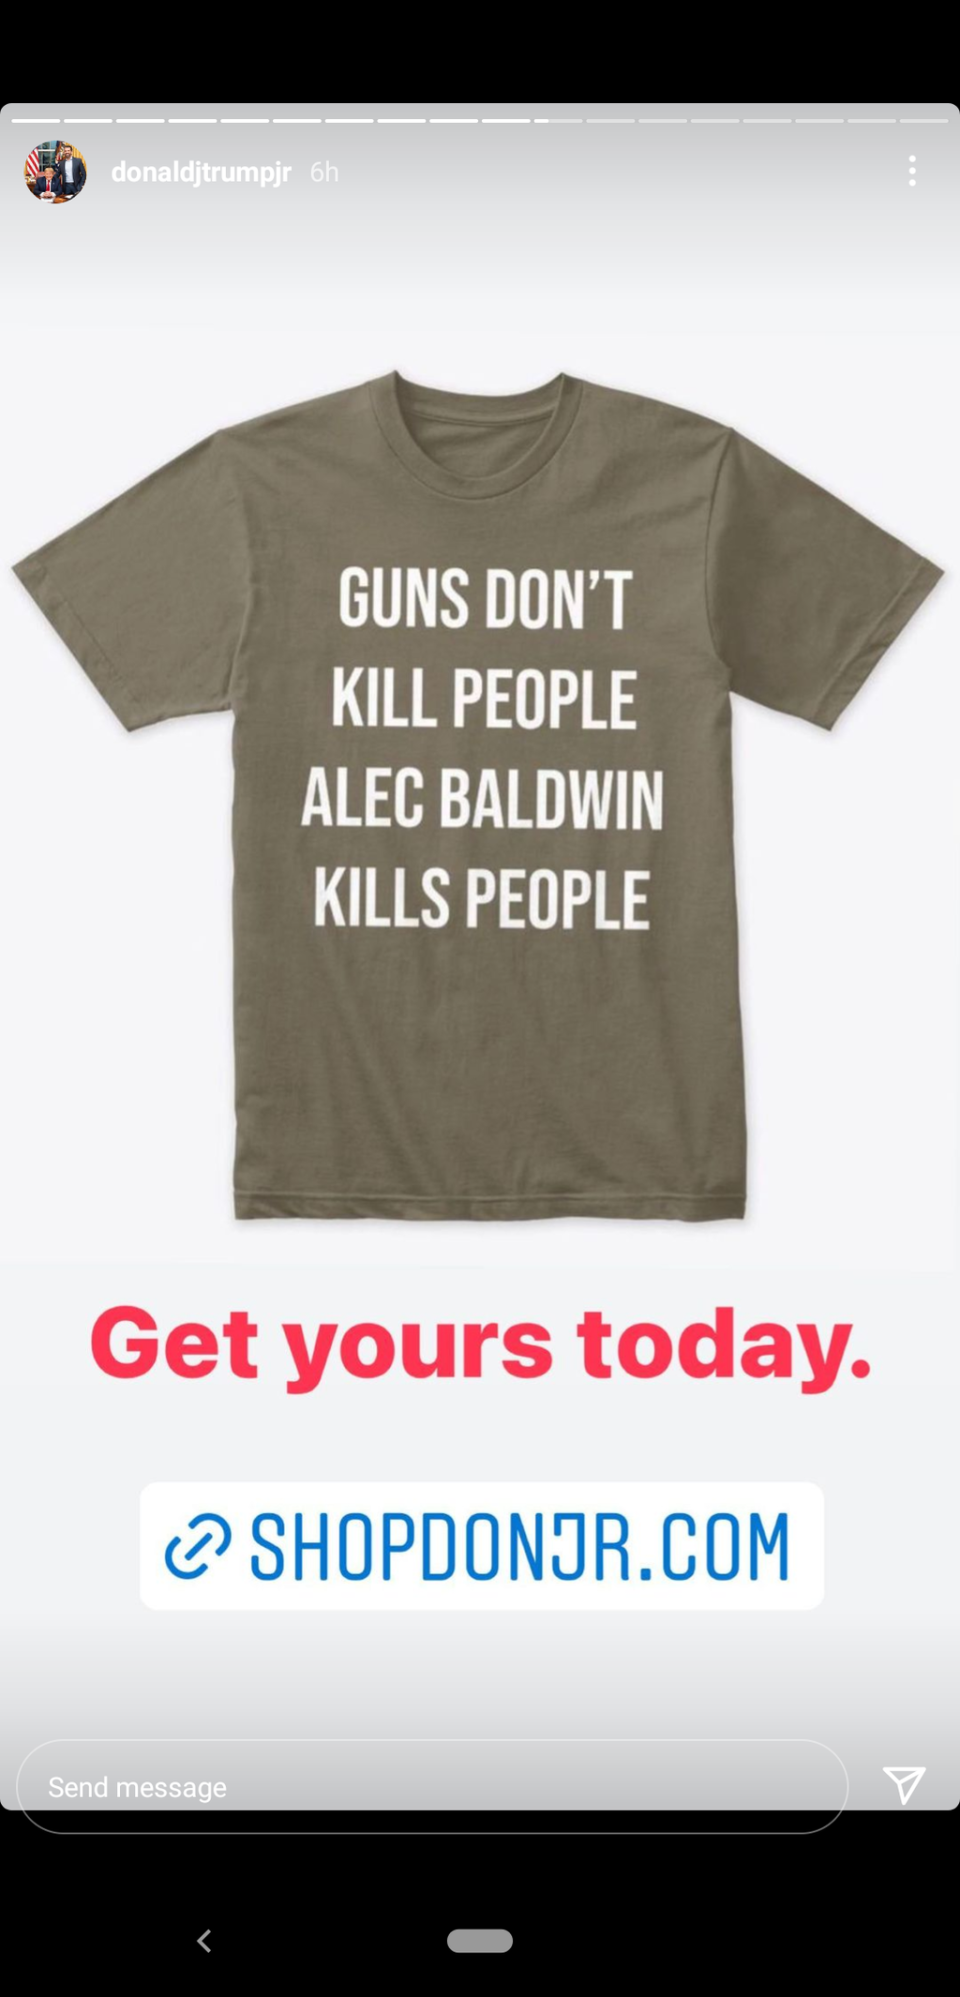 Donald Trump Jr is selling t-shirts with the words “Guns don’t kill people, Alec Baldwin kills people” (Instagram/ Donald Trump Jr)